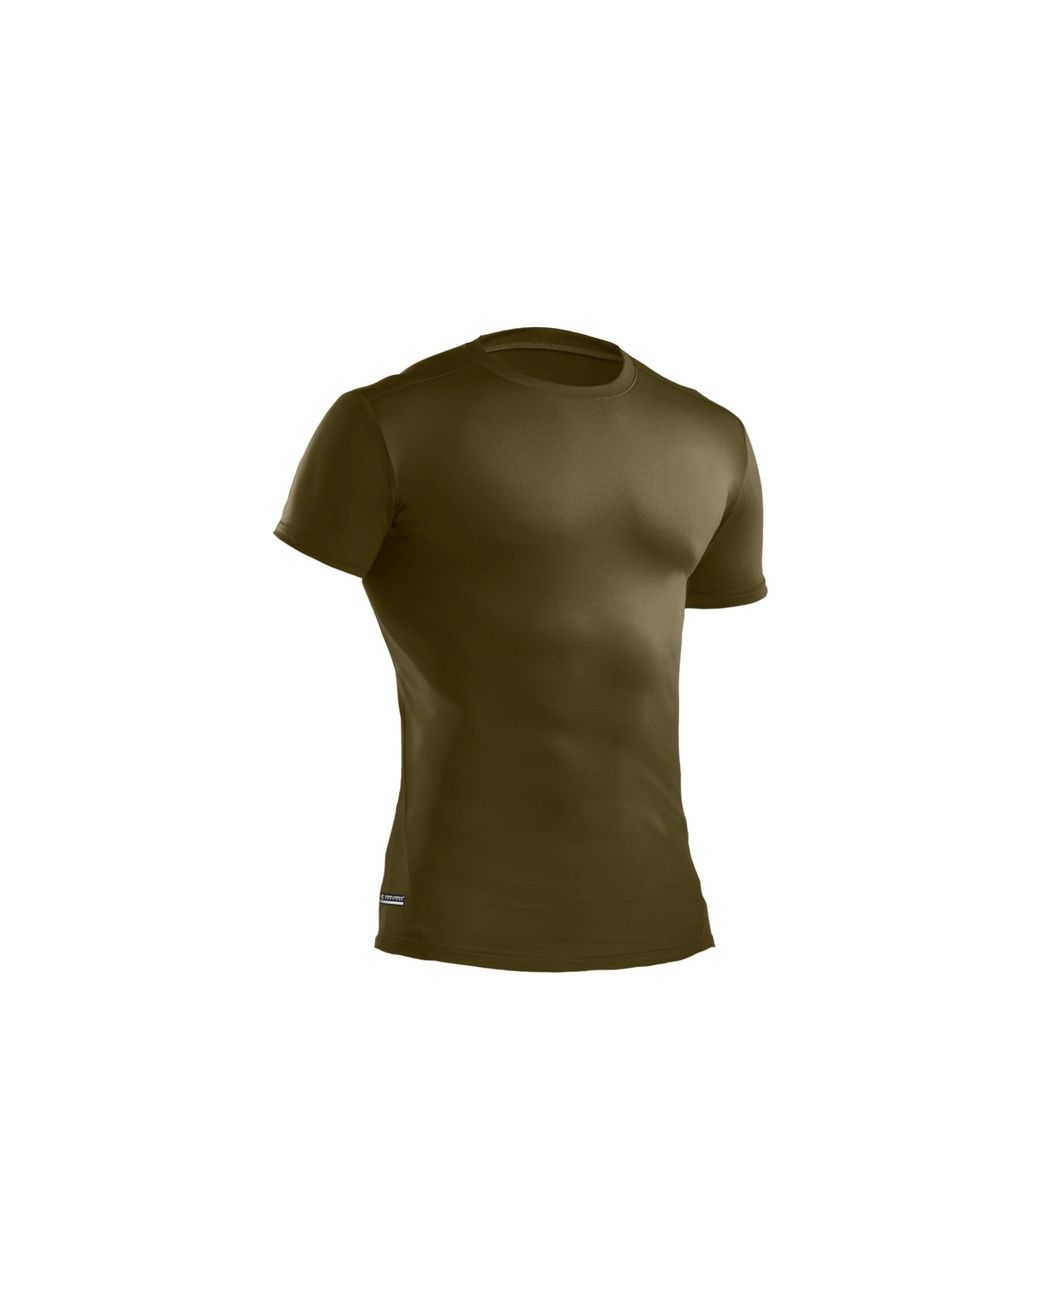 Maelstrom TAC PRO Men's Tactical Compression Short-Sleeve Undershirt 